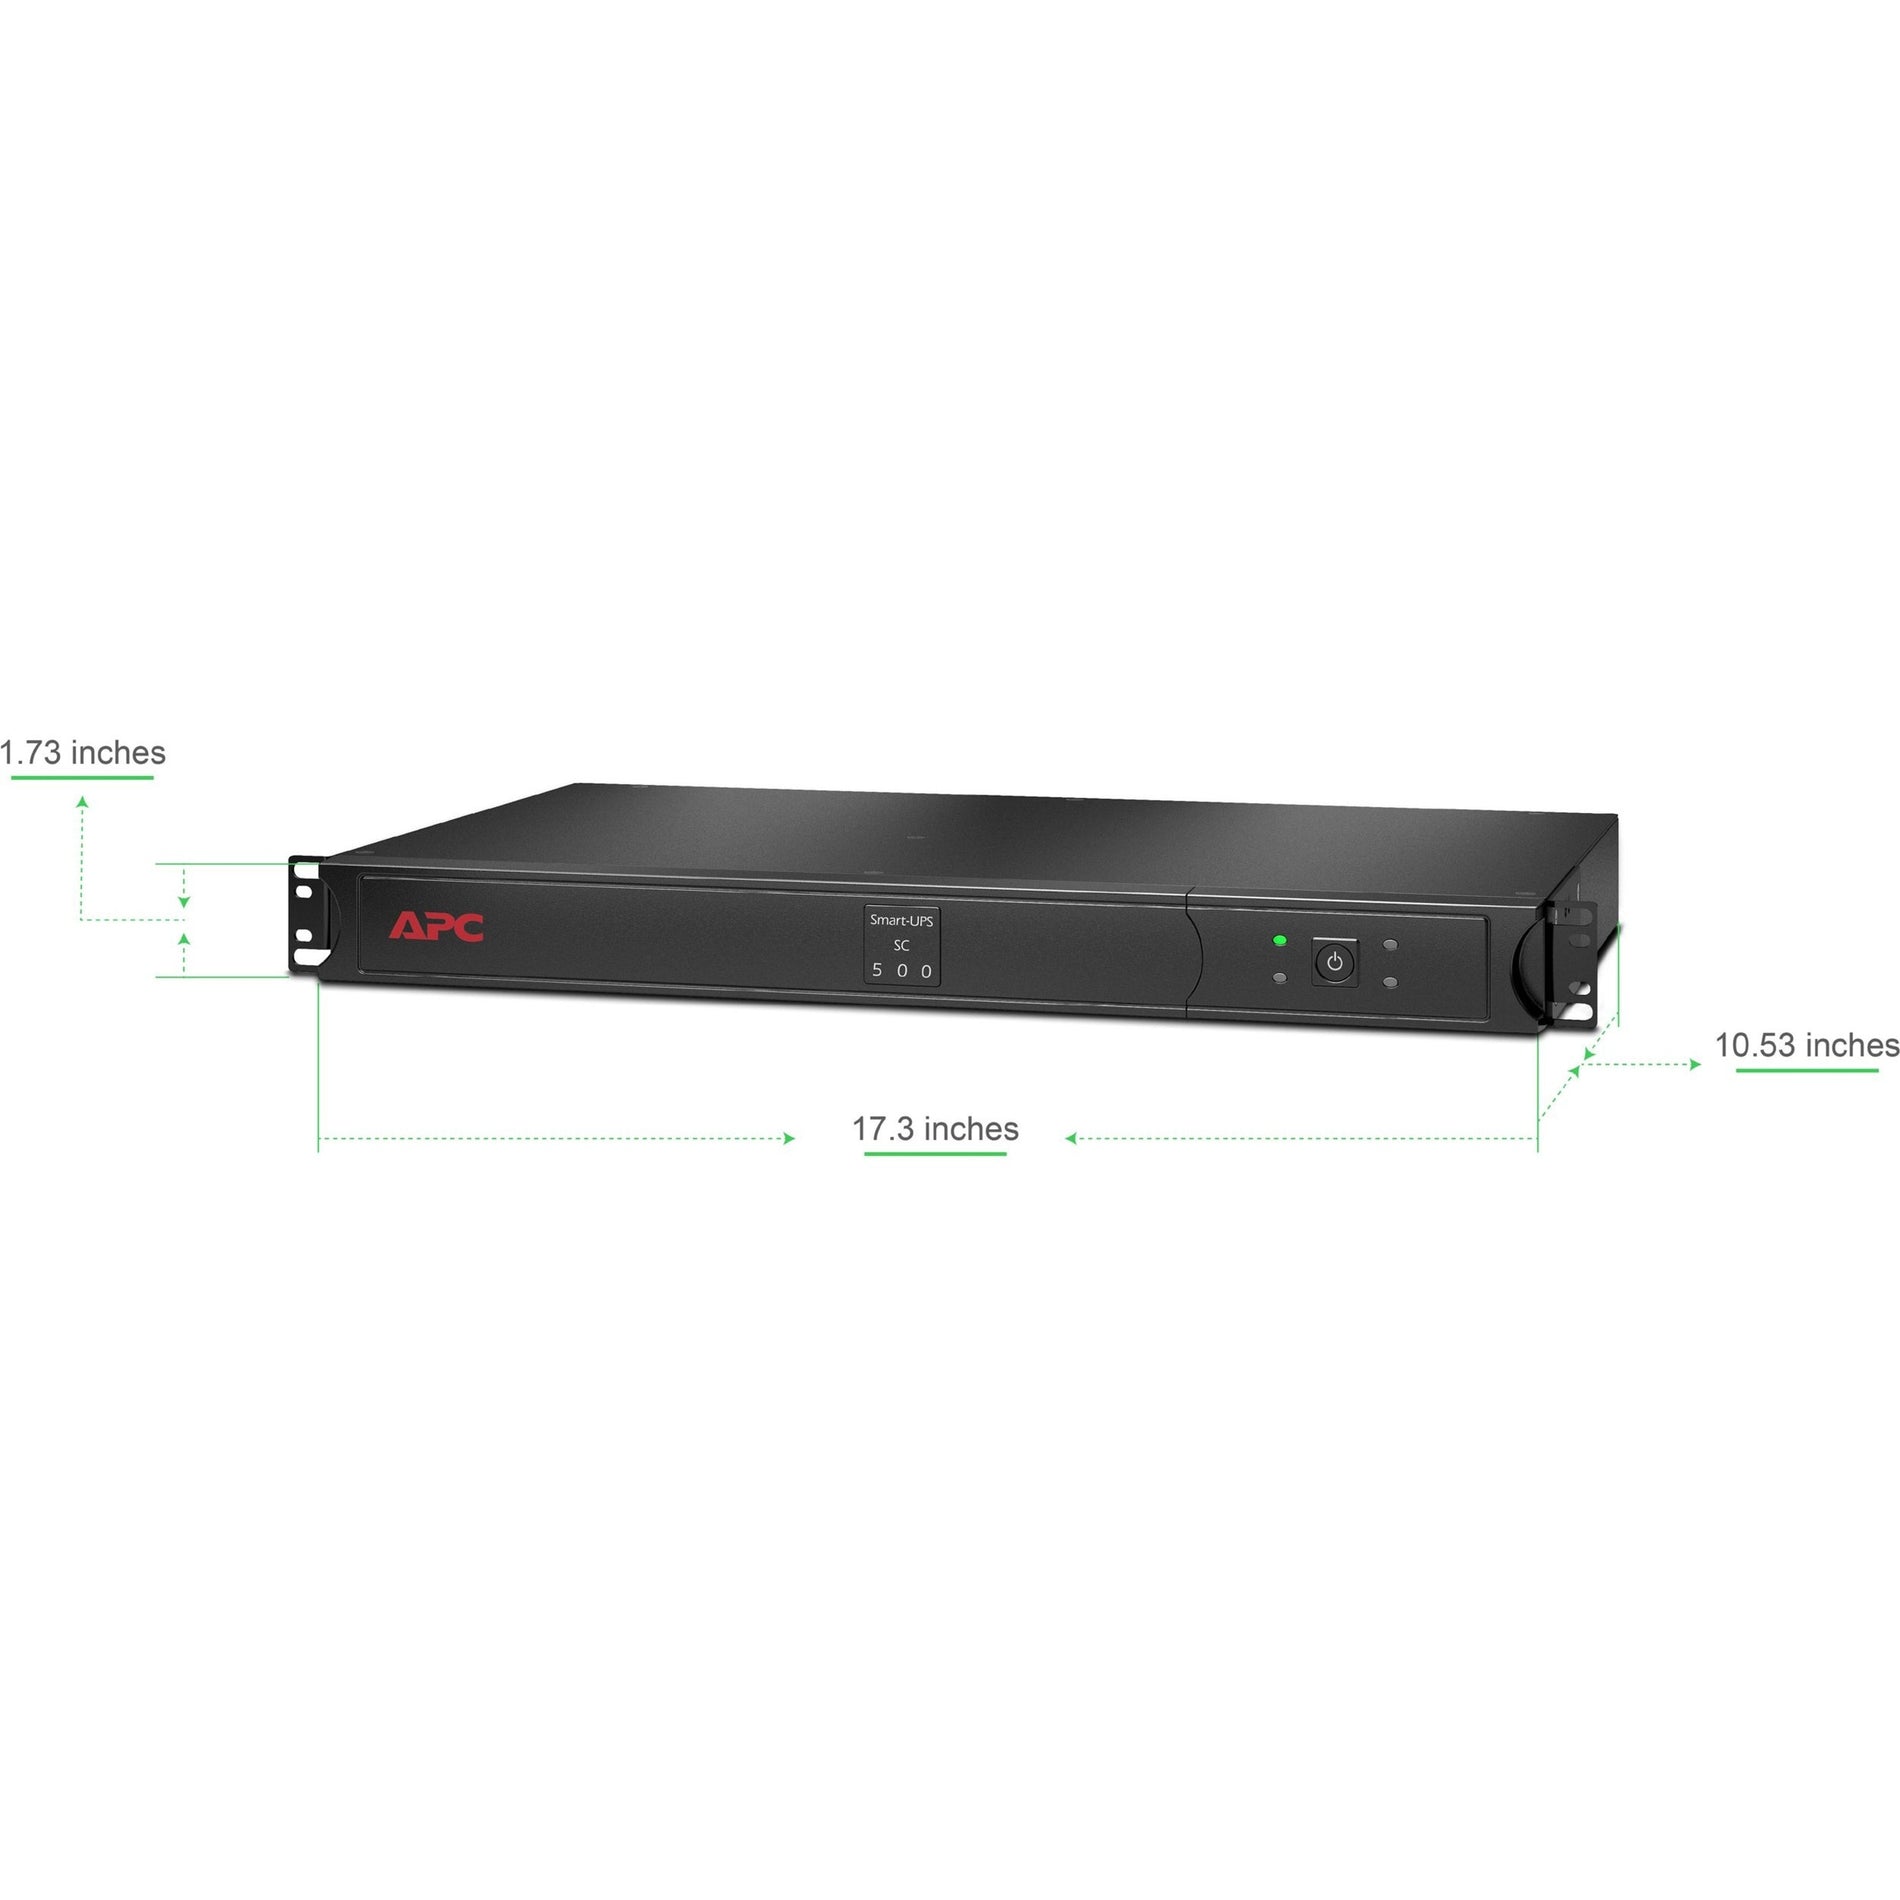 APC SC500RM1U Smart-UPS 500VA Rack-mountable UPS, Energy Star, USB, Network (RJ-45), LED Display